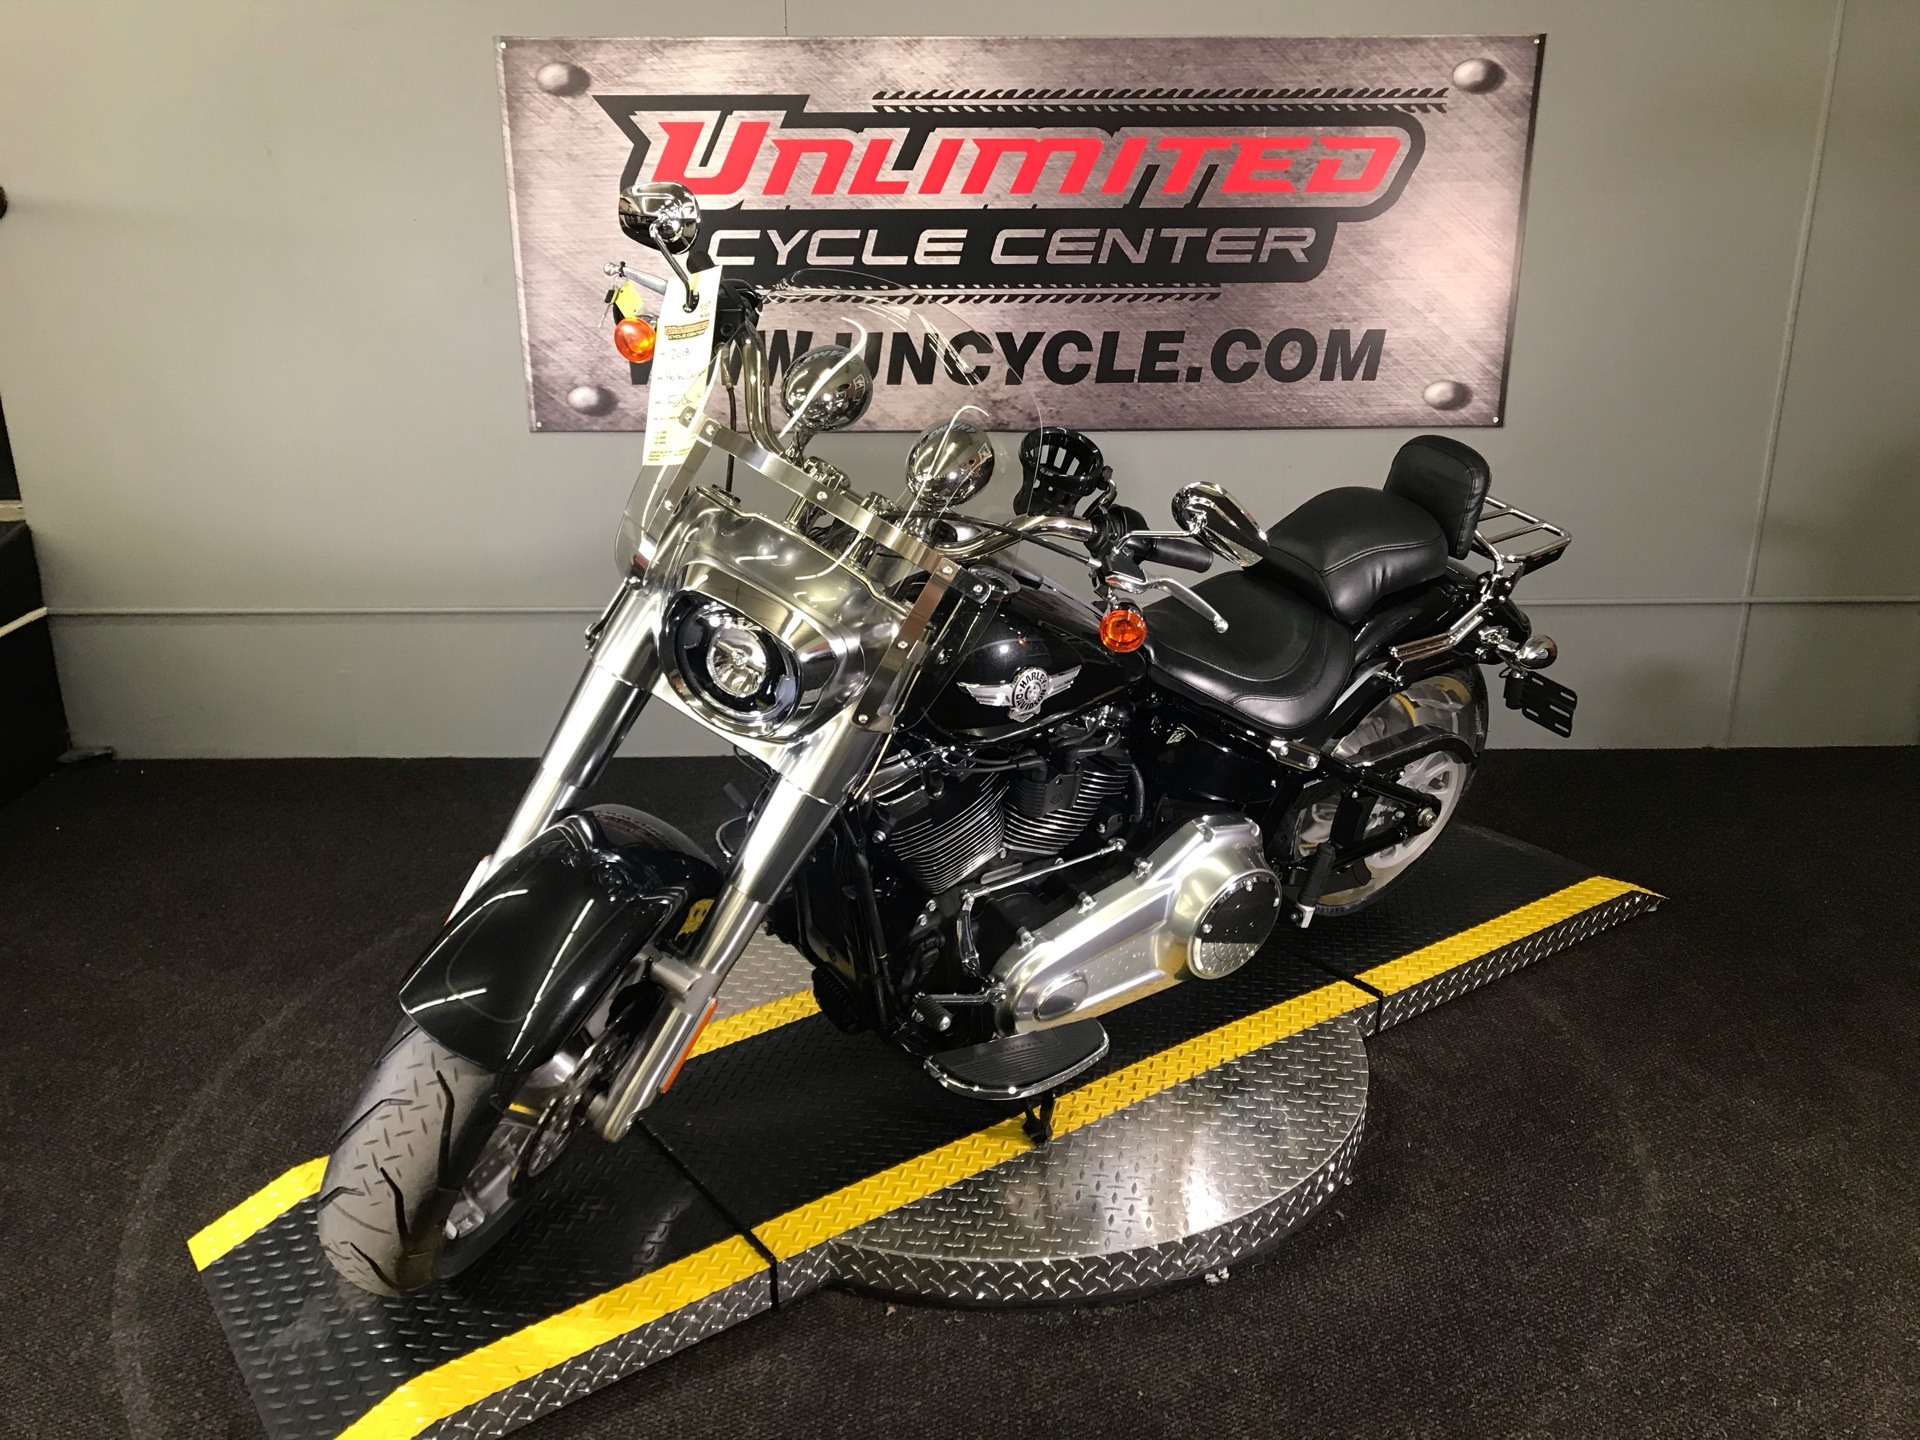 2018 Harley-Davidson Fat Boy® 114 in Tyrone, Pennsylvania - Photo 6